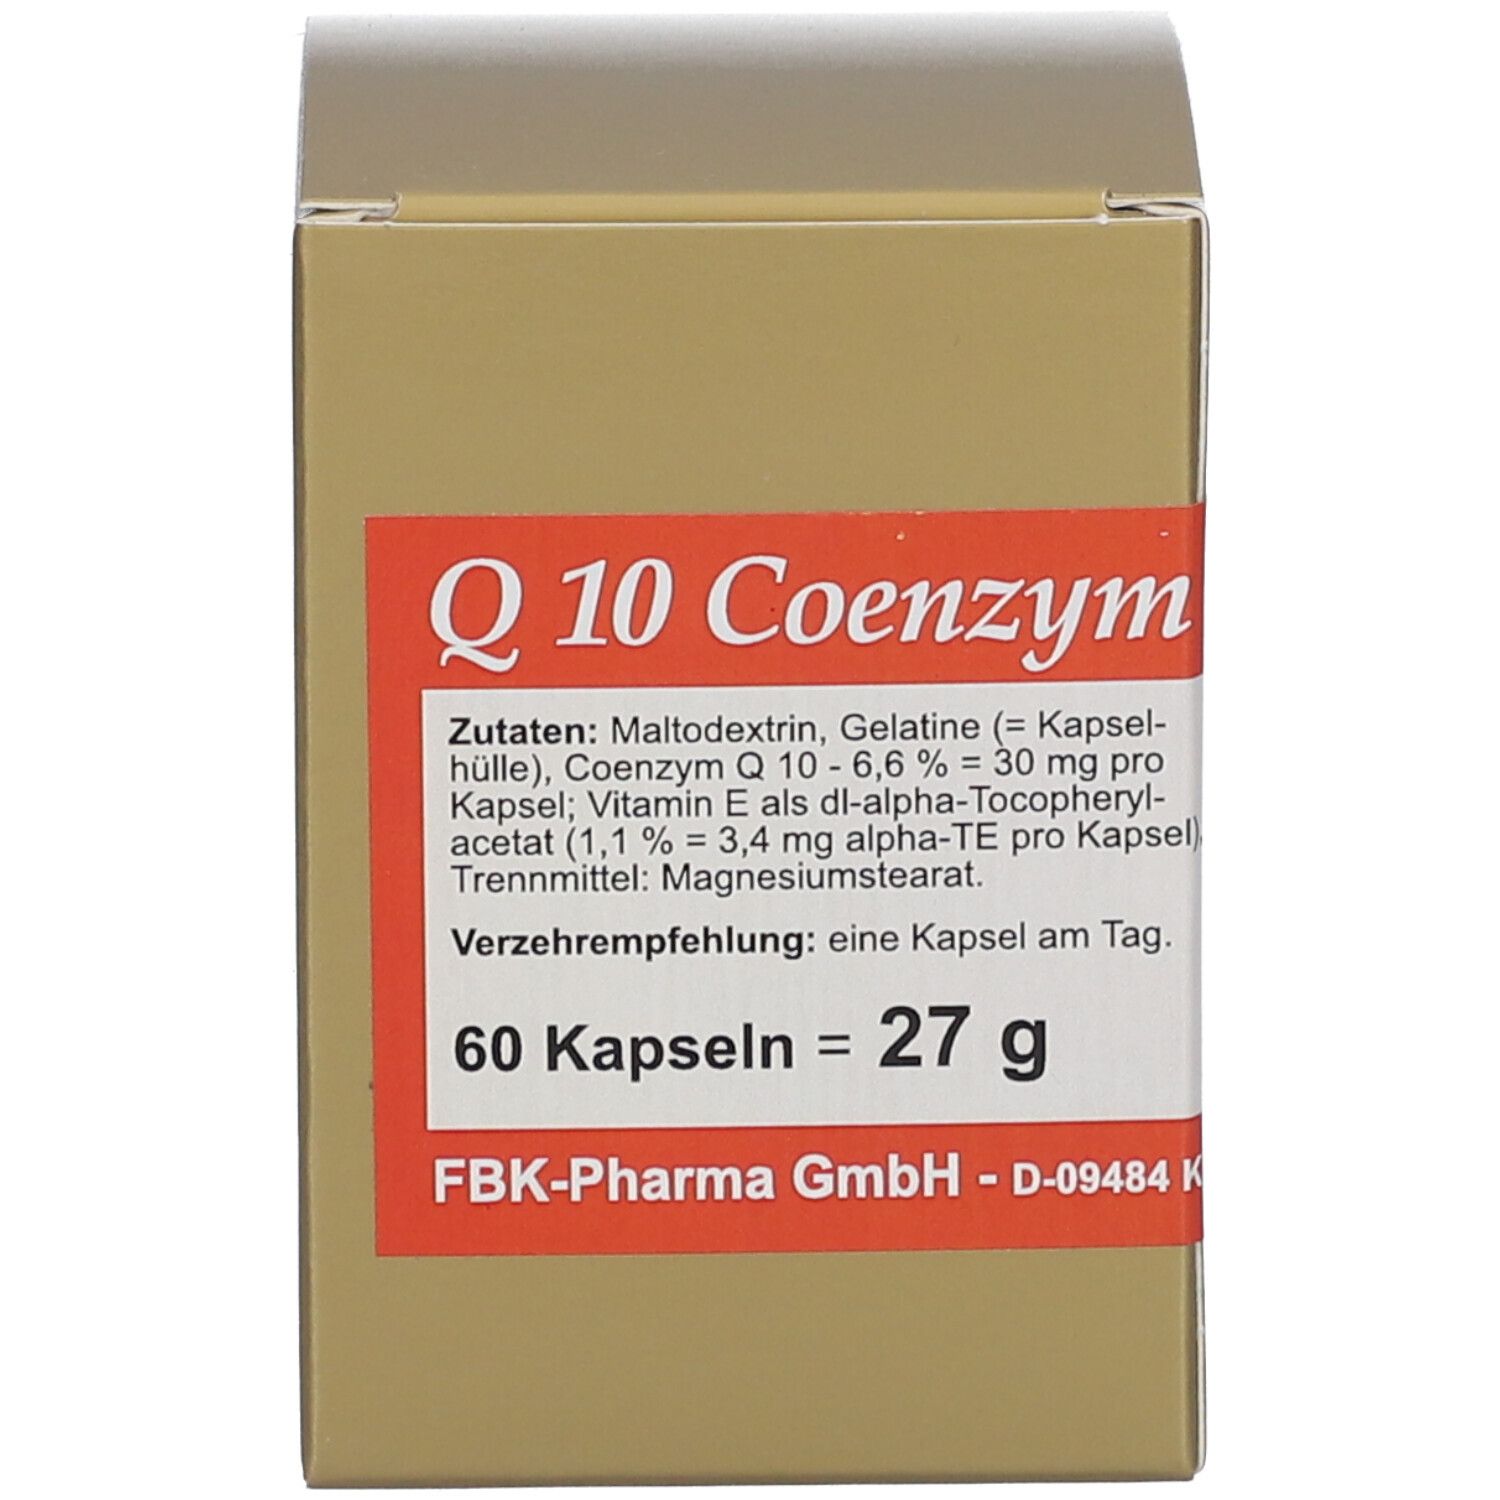 Q10 Coenzym